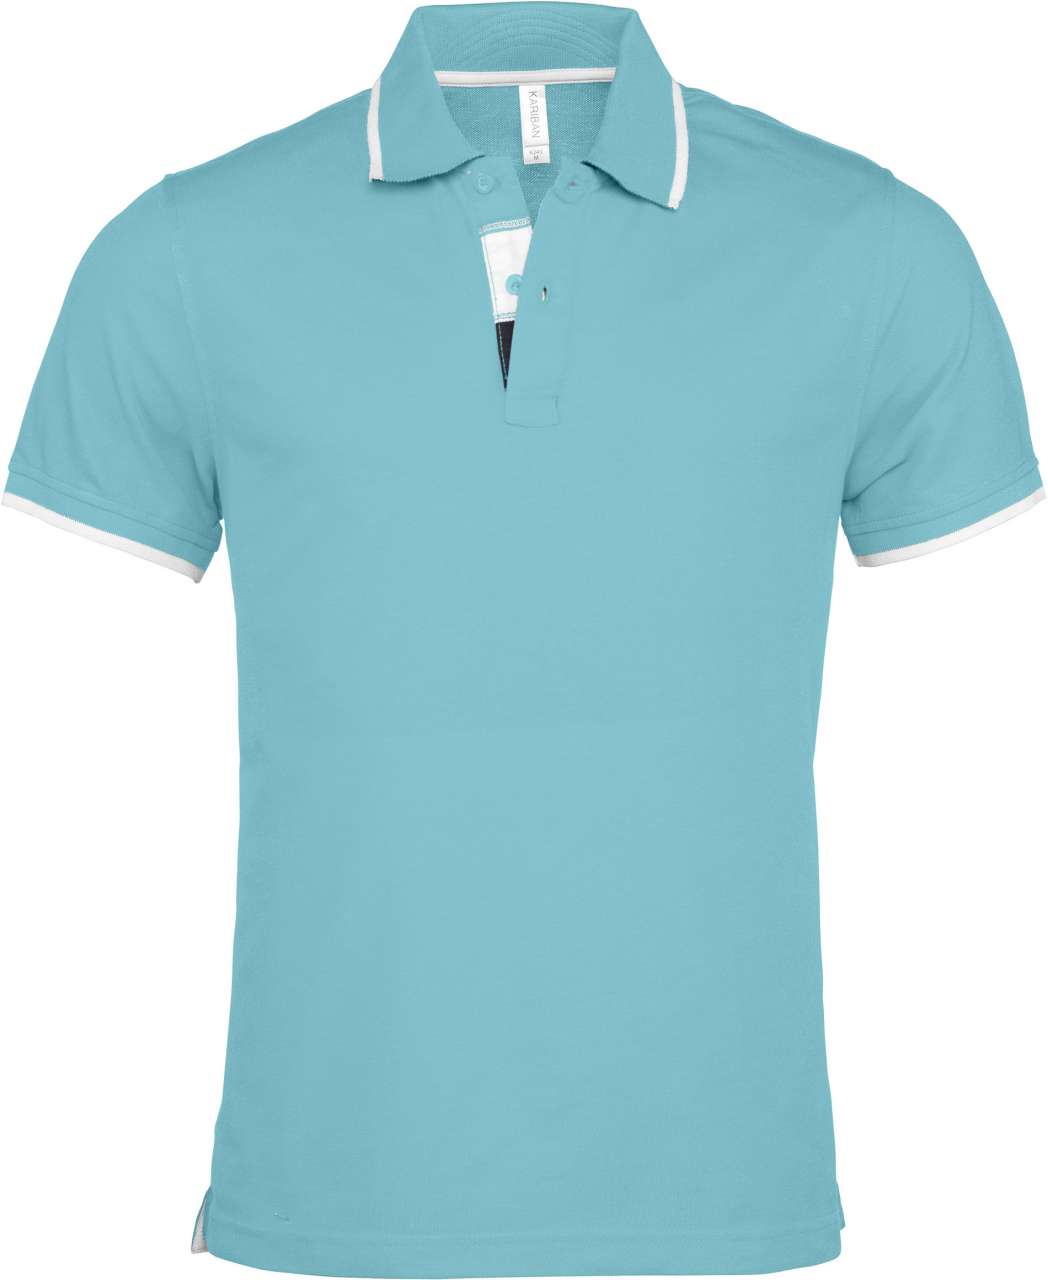 Kariban Herren Polo-Shirt Poloshirt Basic Kontrast Kragen Kurzarm